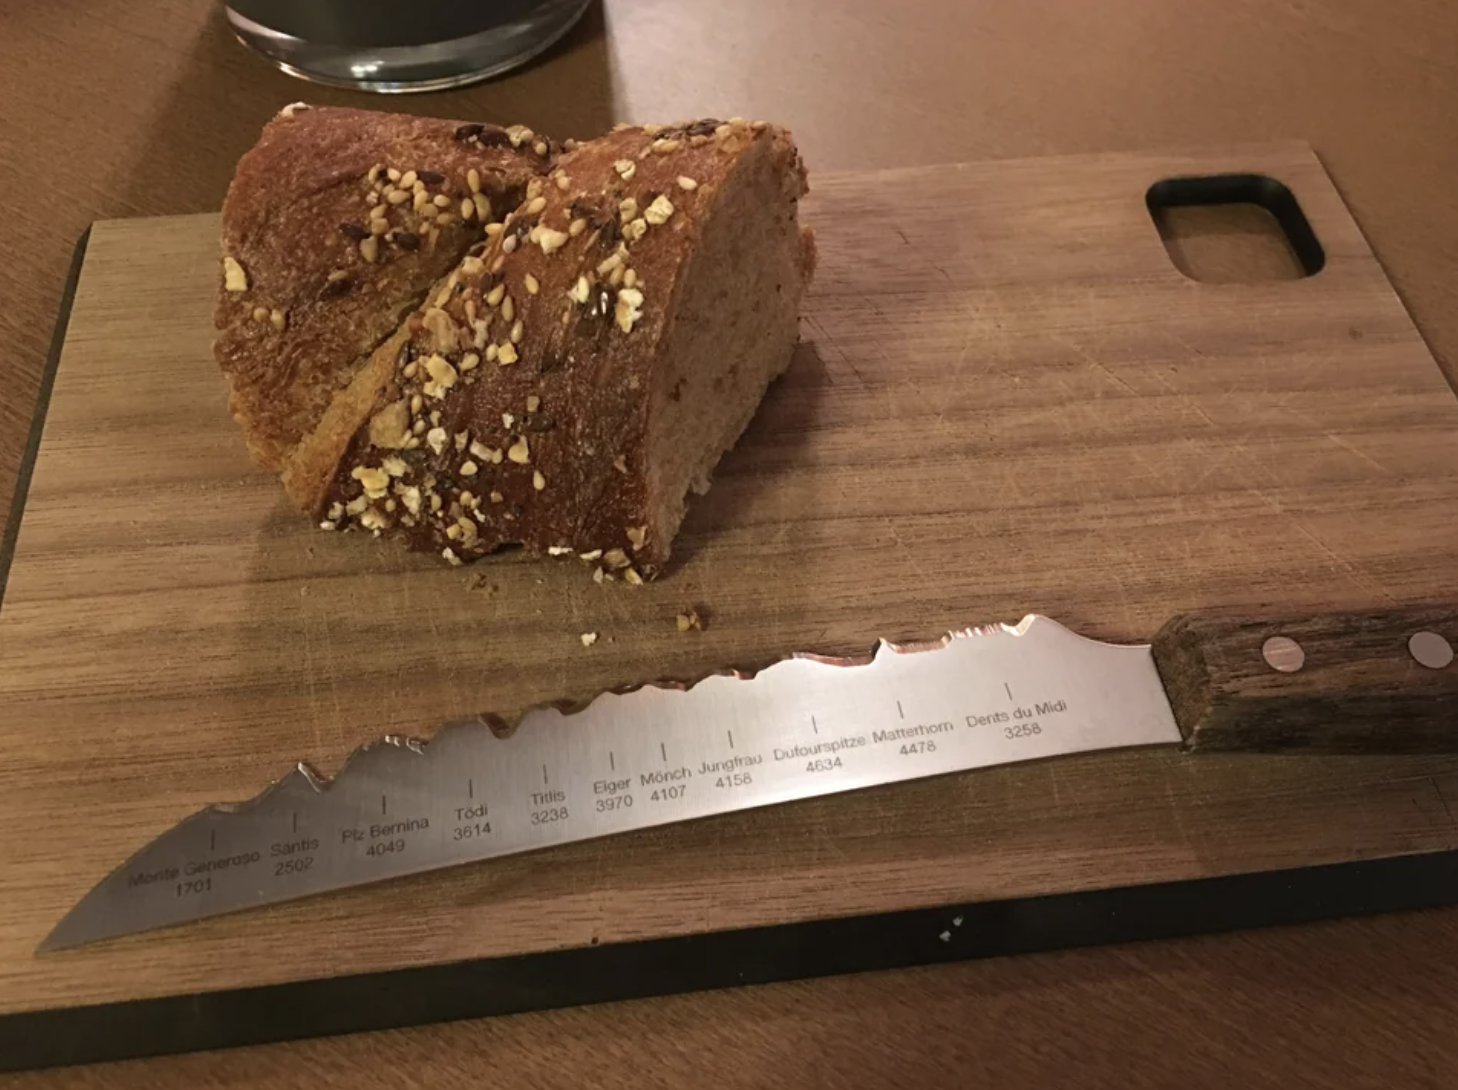 Swiss Alps knife